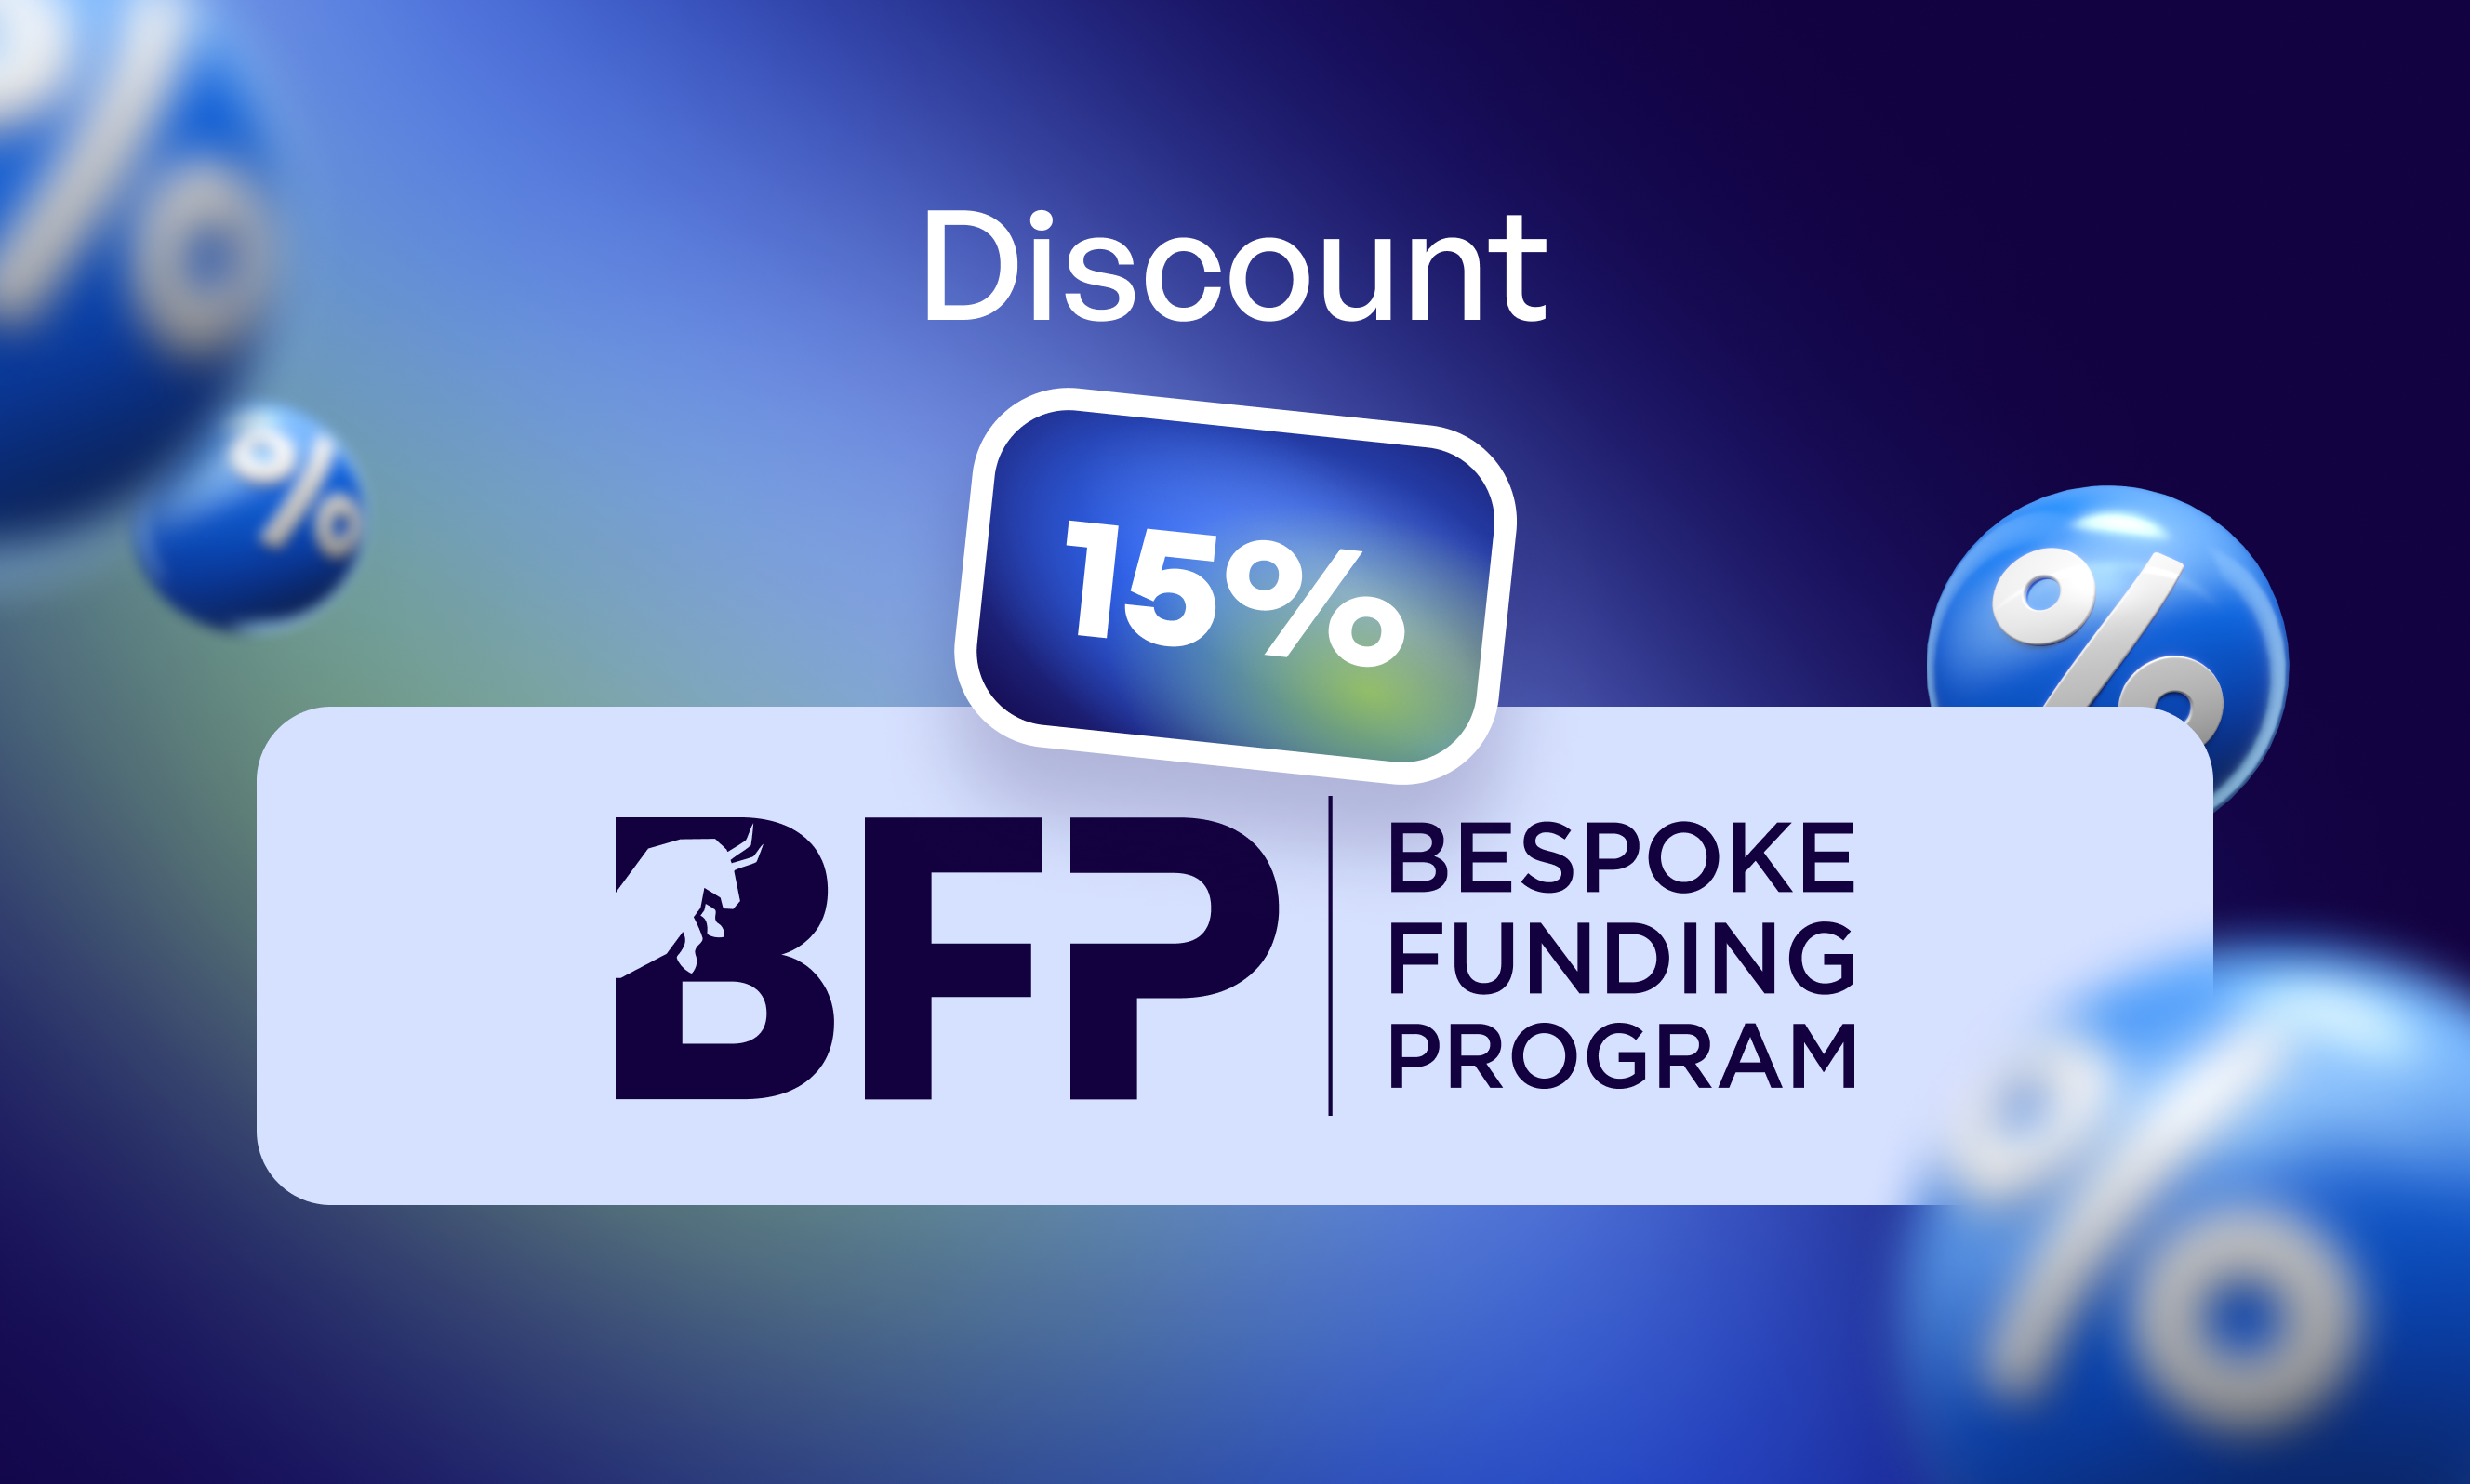 Get 15% Off Bespoke Funding Program with fxprop promo code